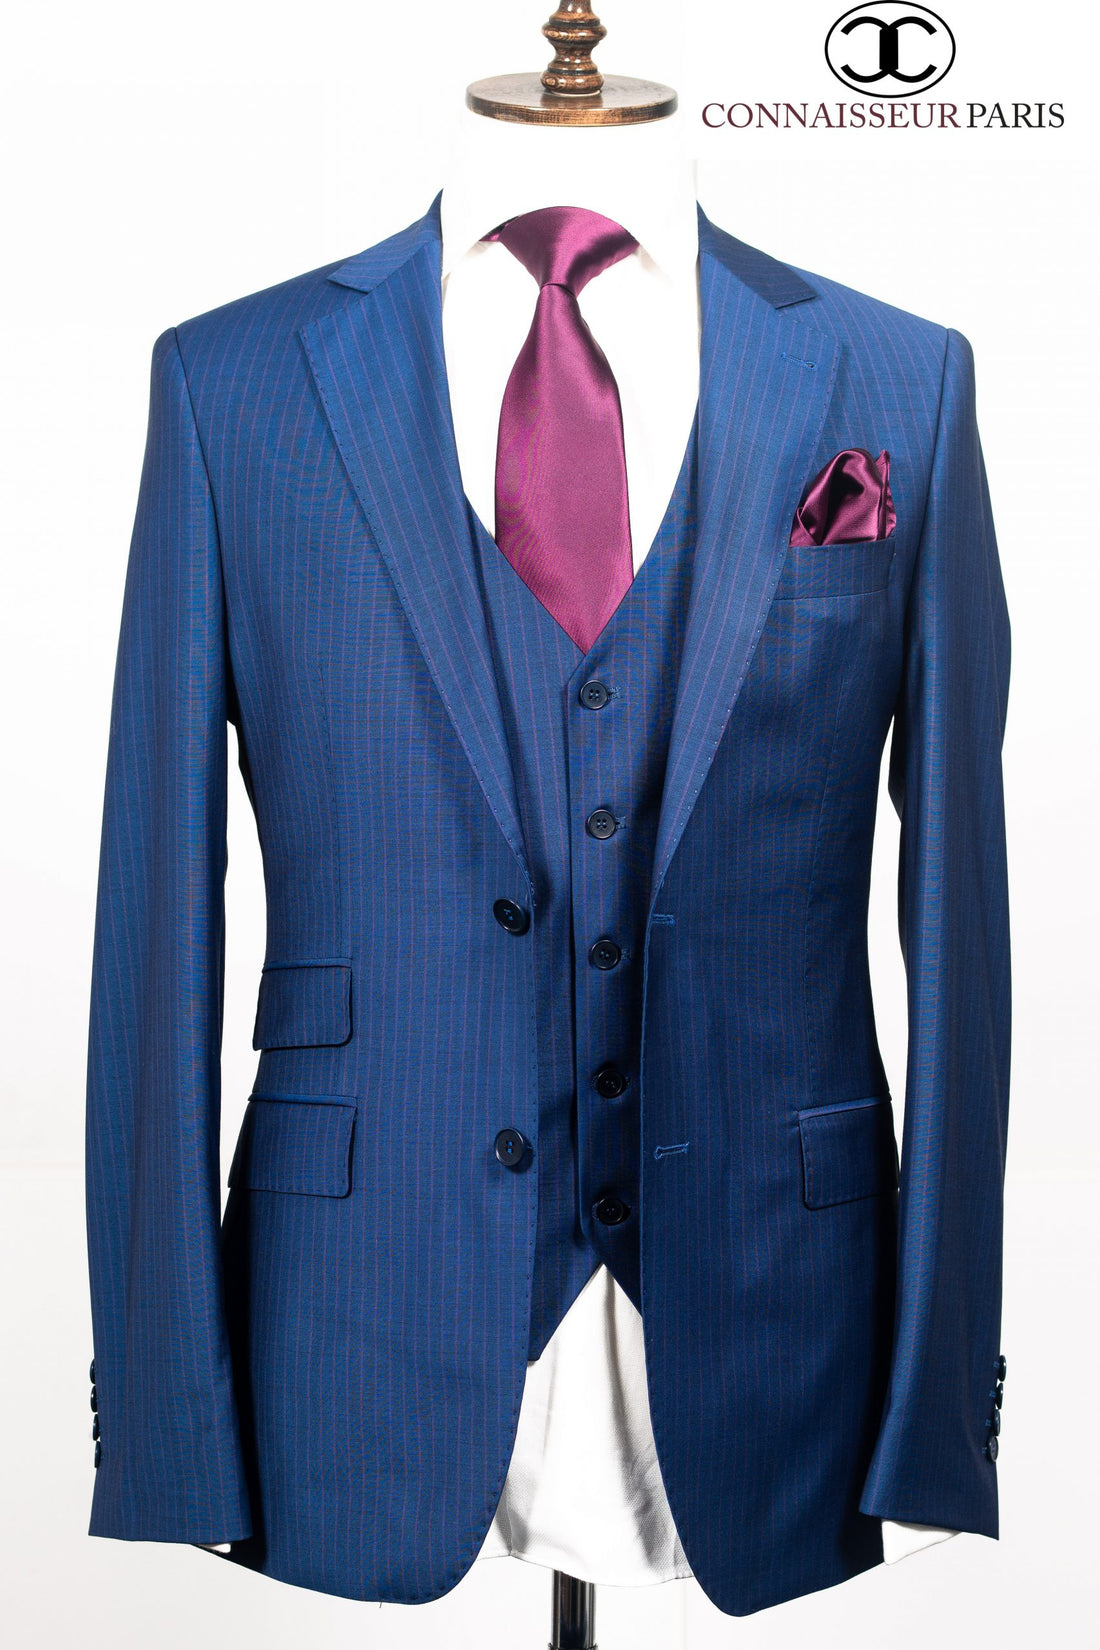 Connaisseur  - Blue with fuchsia pinstriped 3-piece slim fit suit and V vest